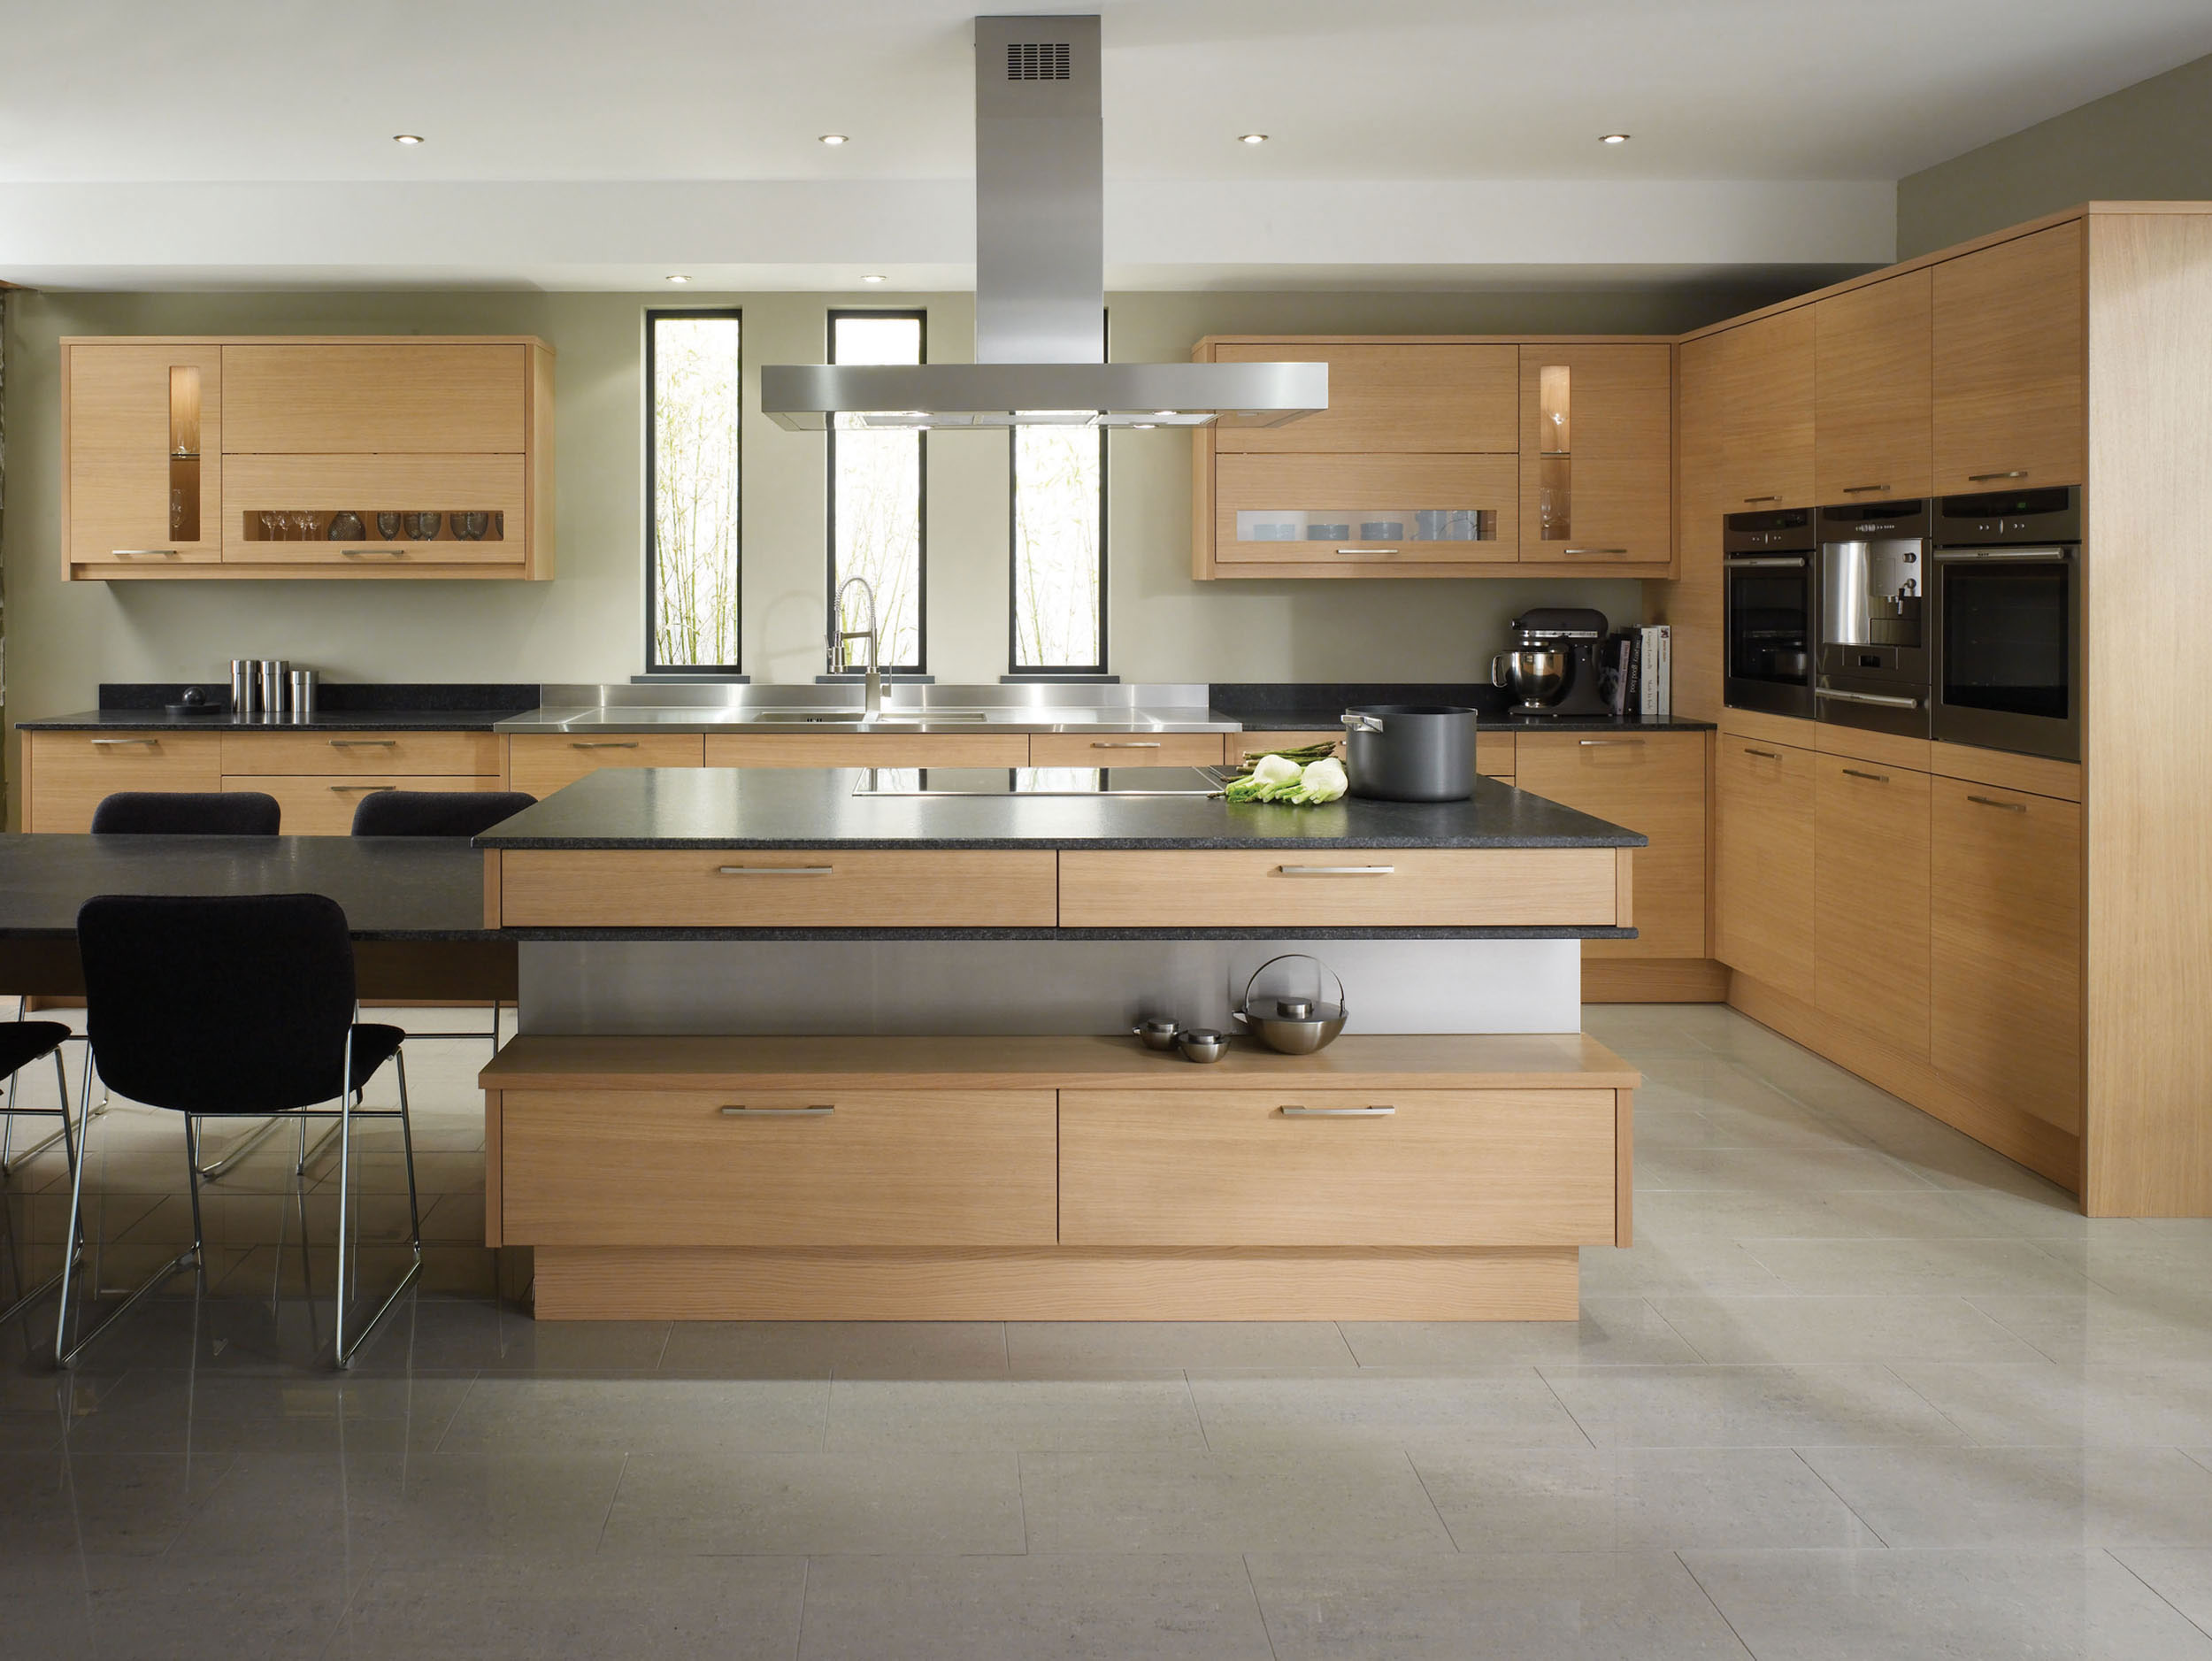 kitchen modern designs level take next these style look